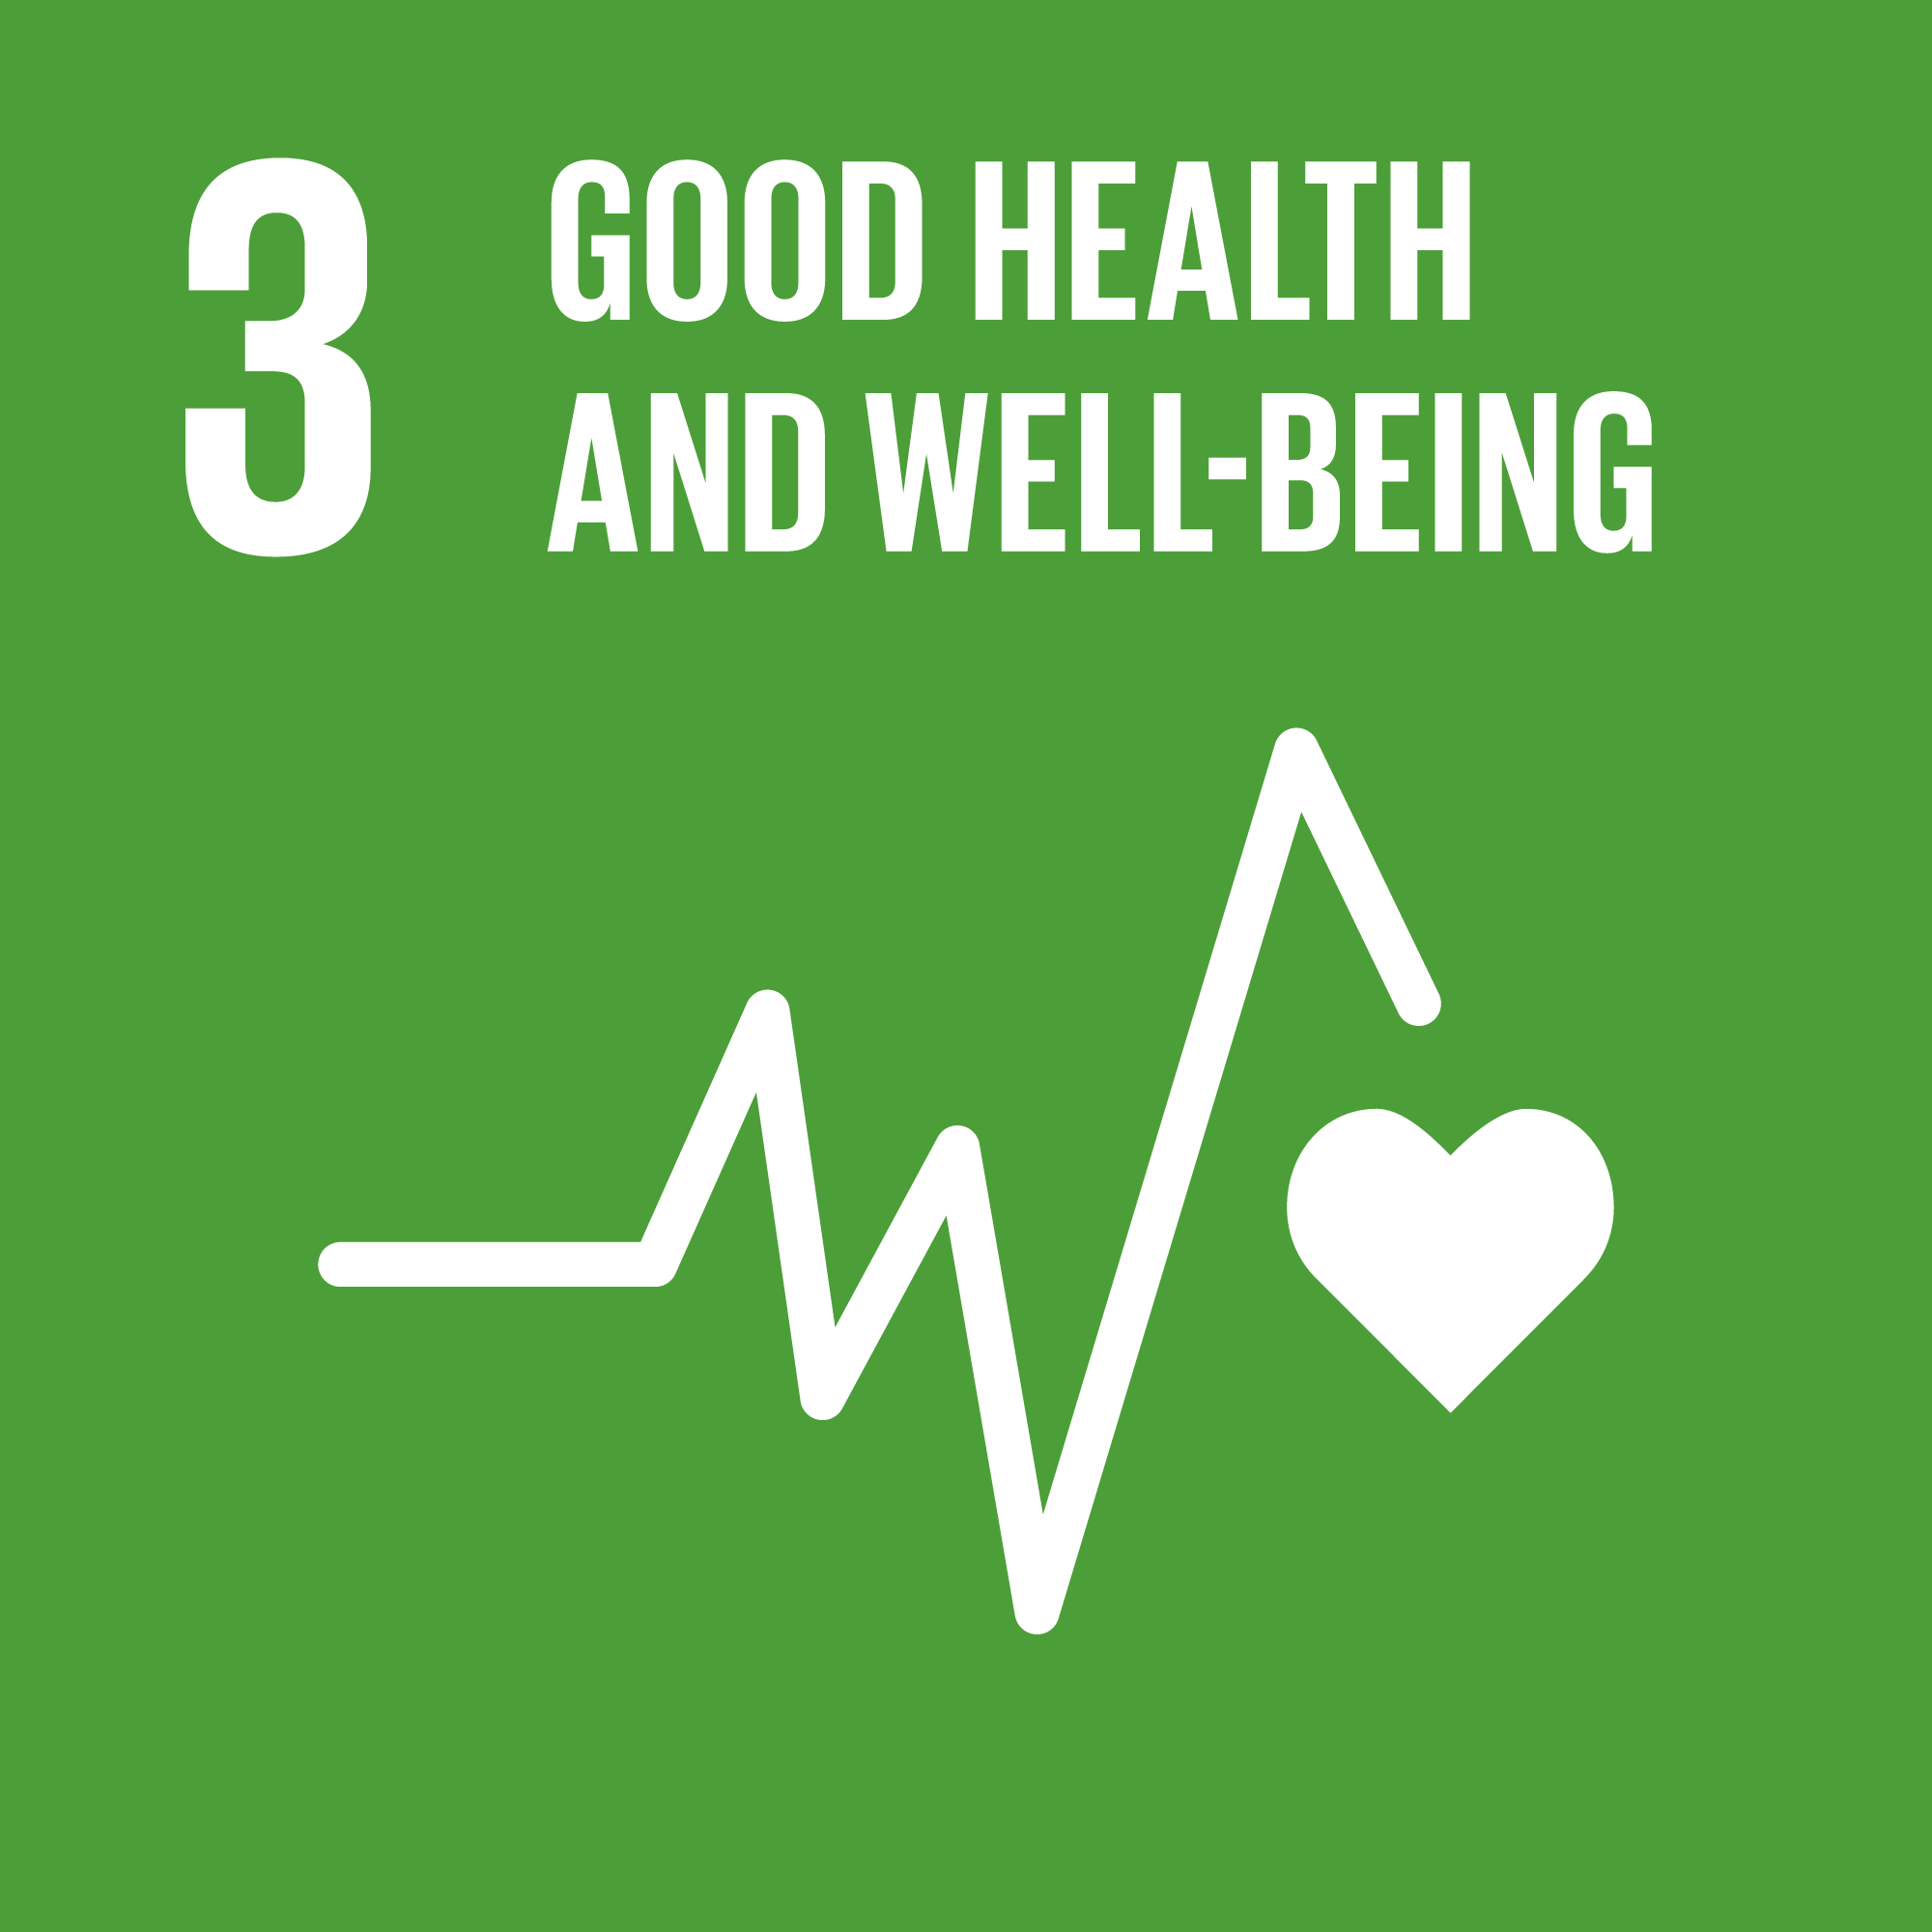 UNSDG Goal 3 - good health